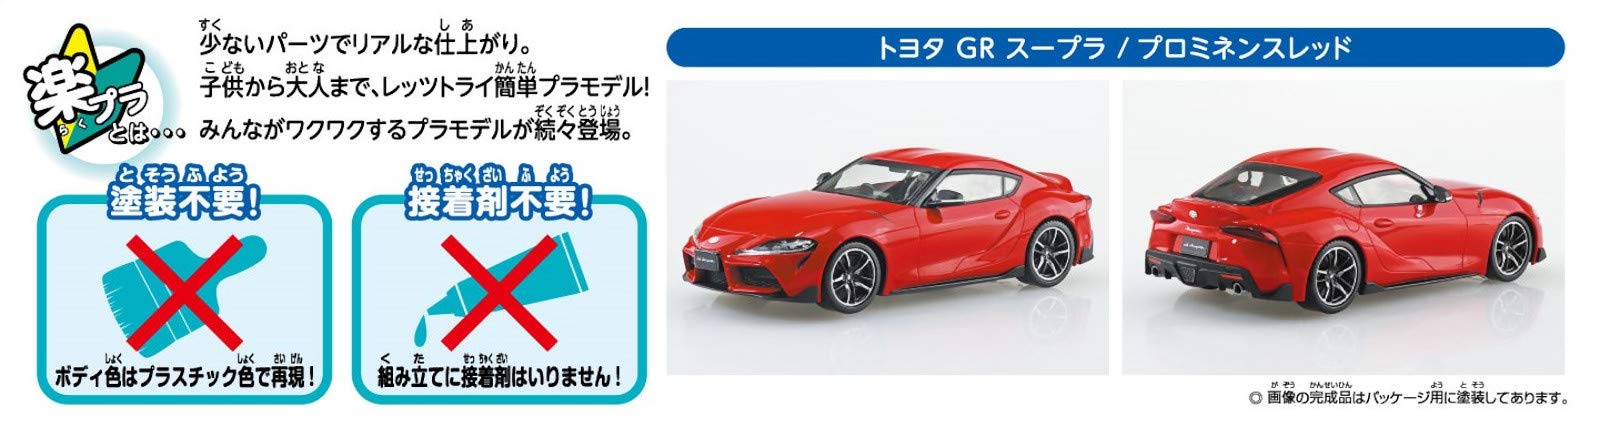 AOSHIMA The Snap Kit 1/32 Toyota Gr Supra Prominence Red Plastic Model